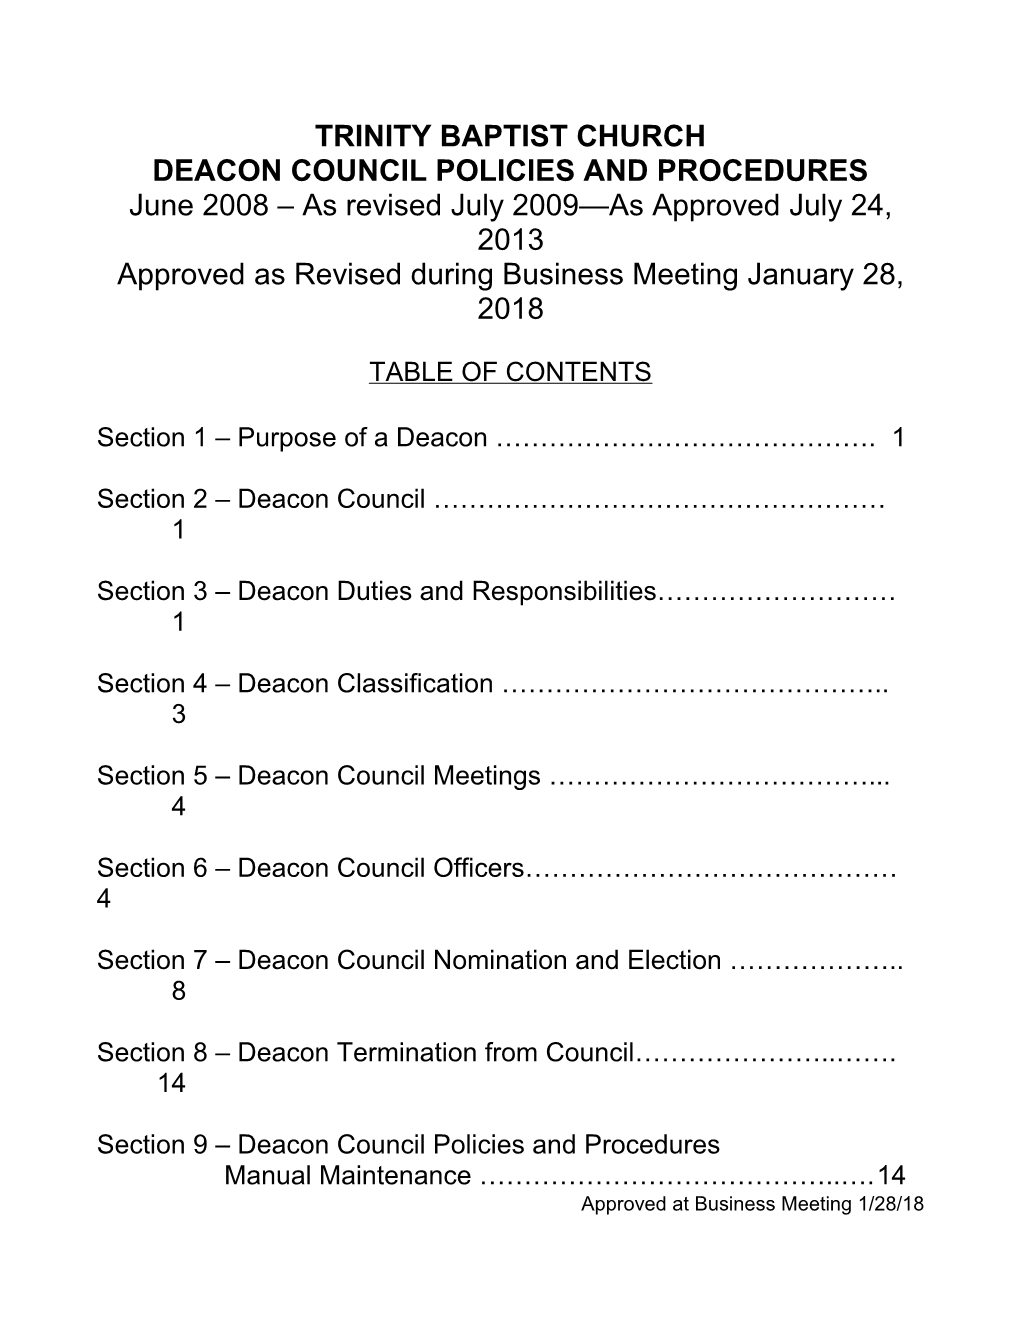 Deacon Council Policies and Procedures